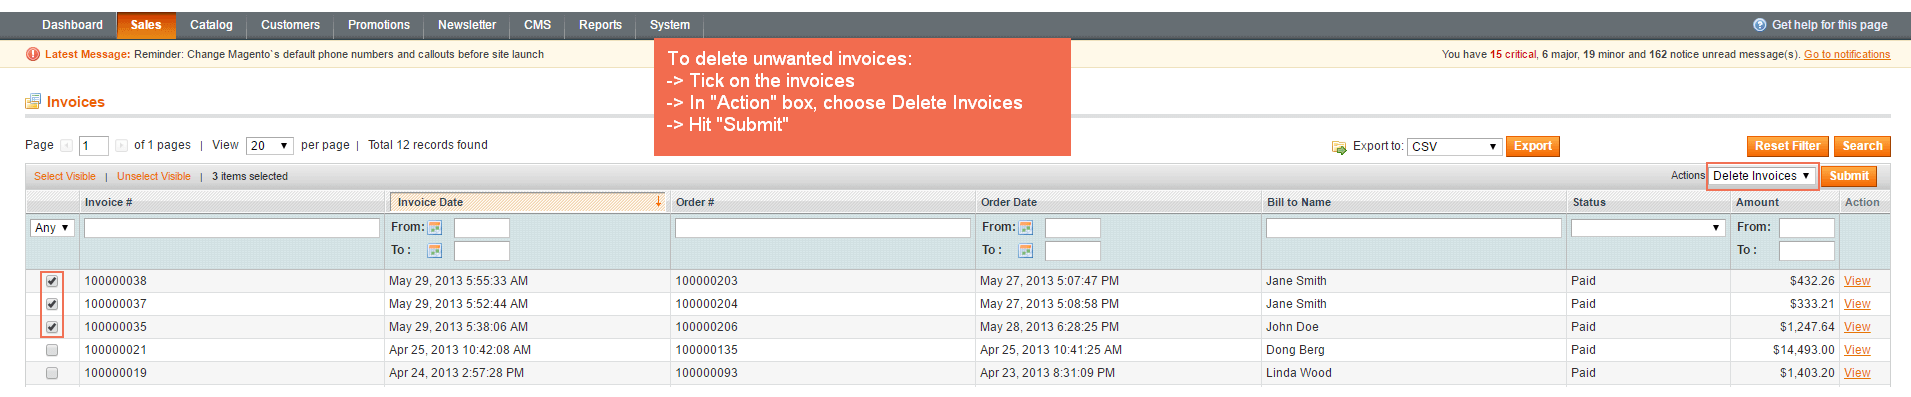 magento-delete-orders-delete-invoices